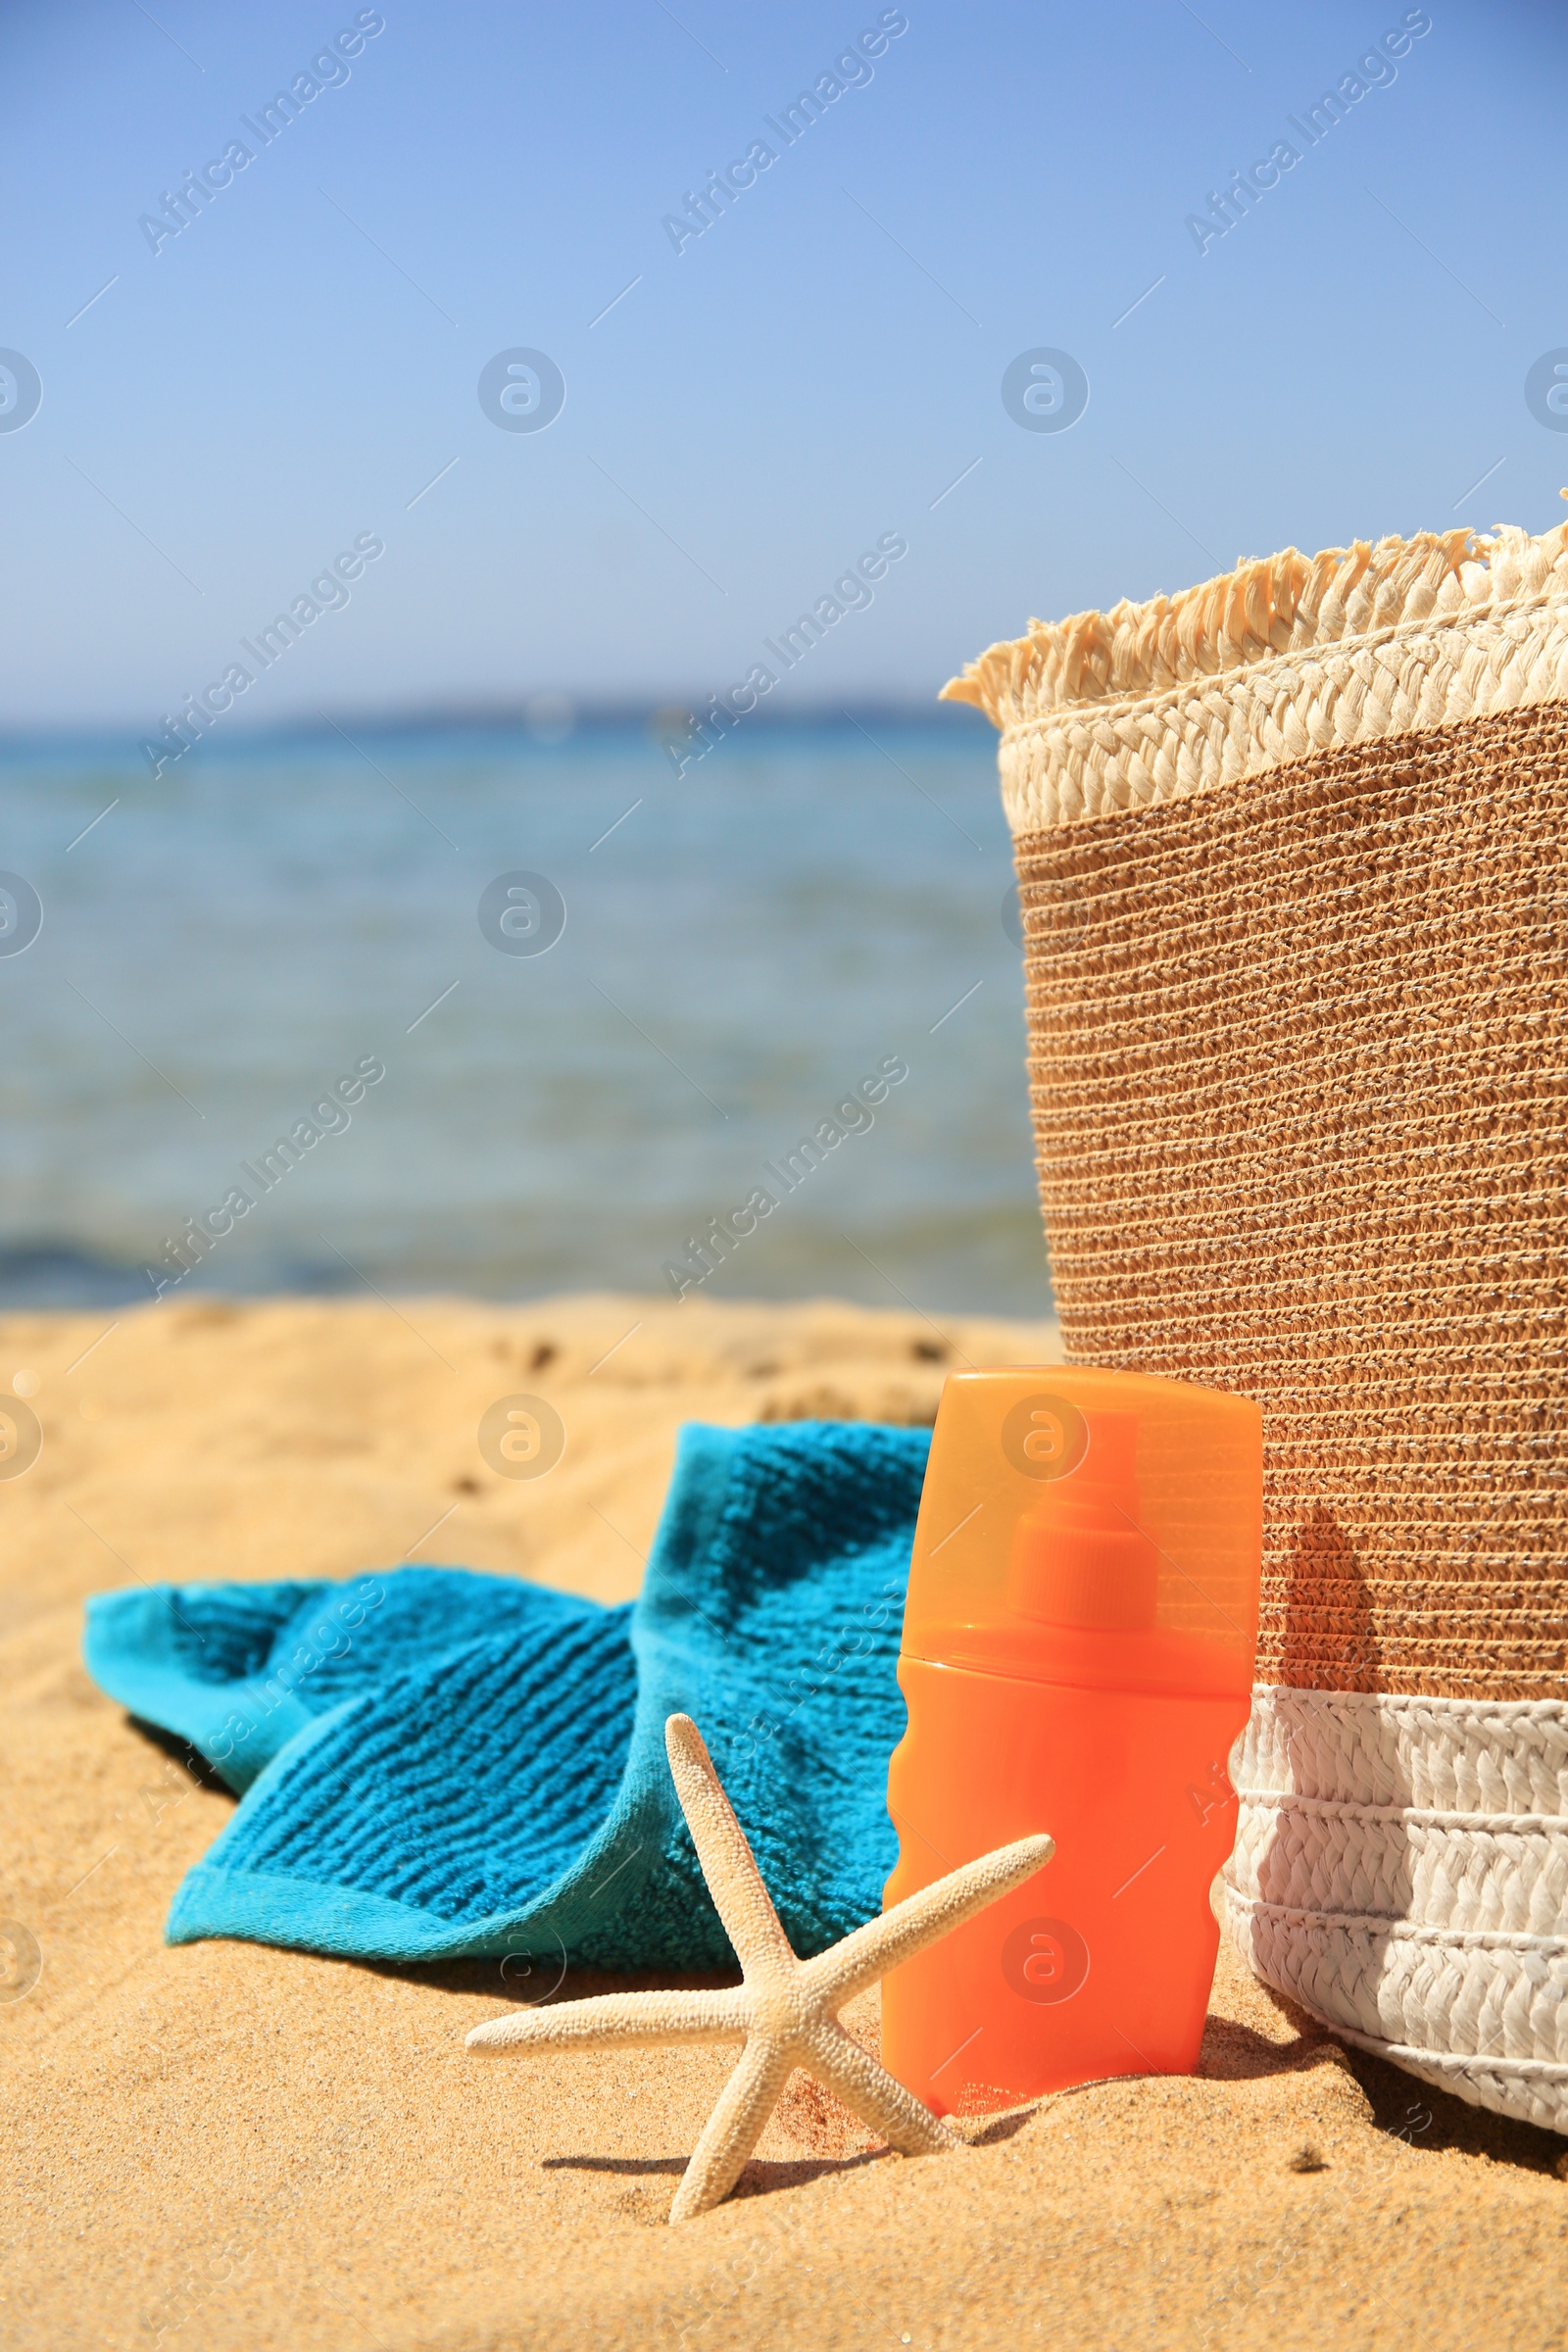 Photo of Sunscreen, starfish, bag and towel on beach. Sun protection care